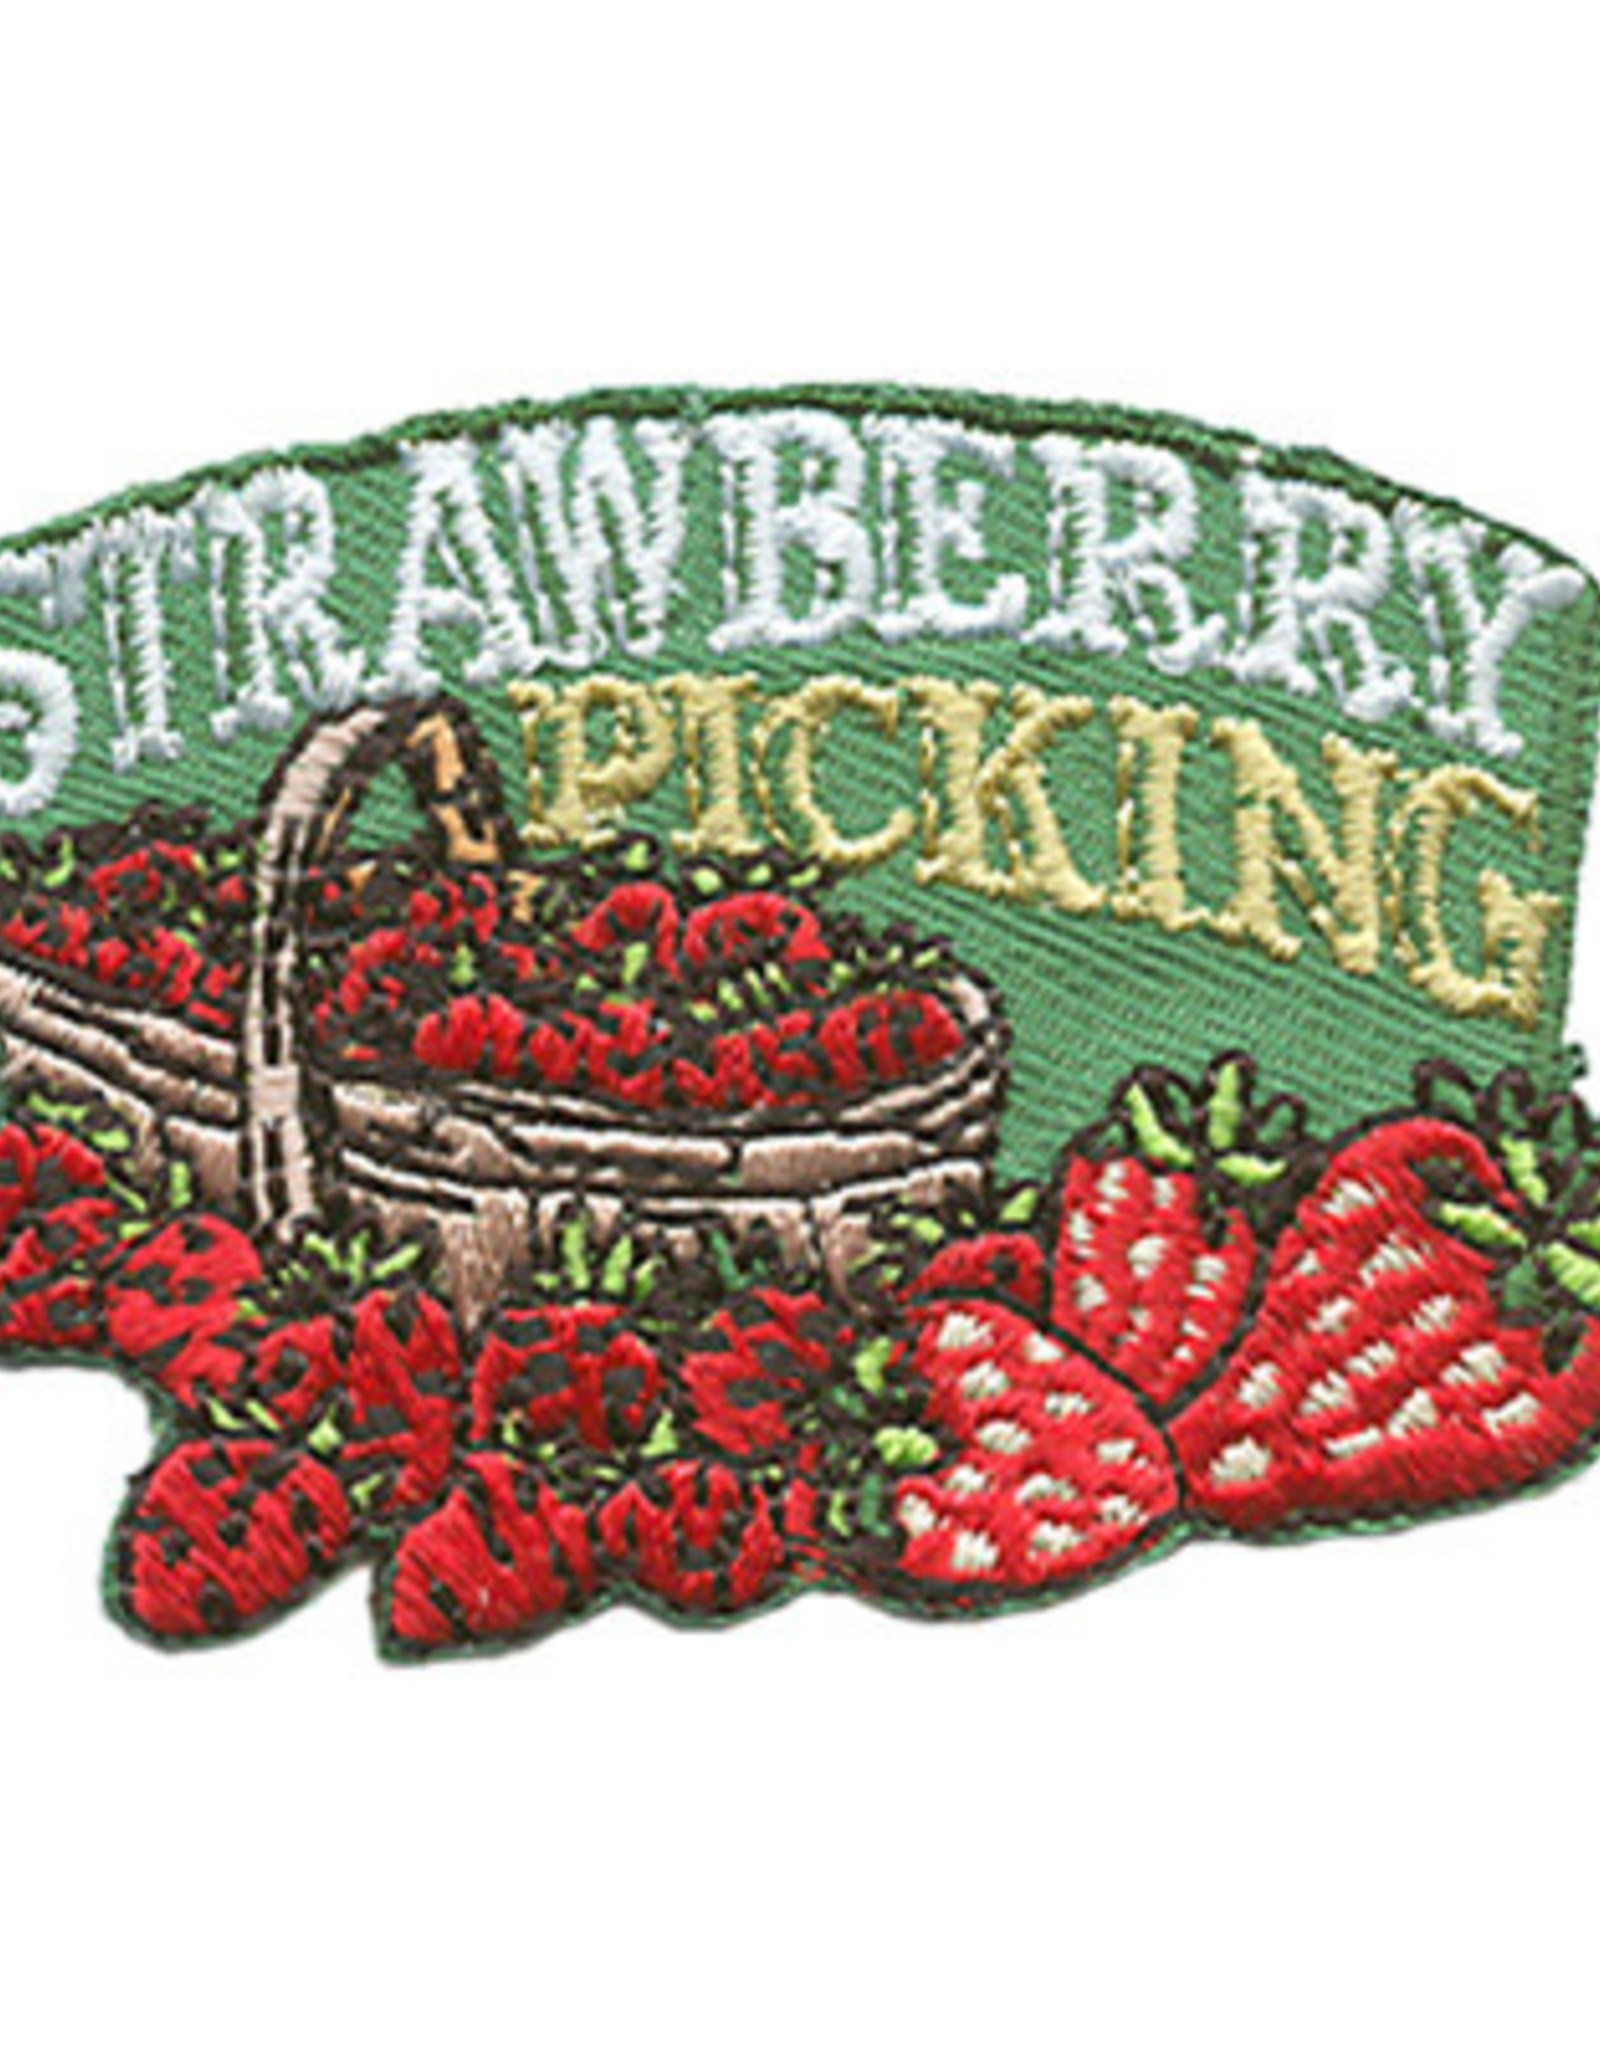 Advantage Emblem & Screen Prnt Strawberry Picking Fun Patch